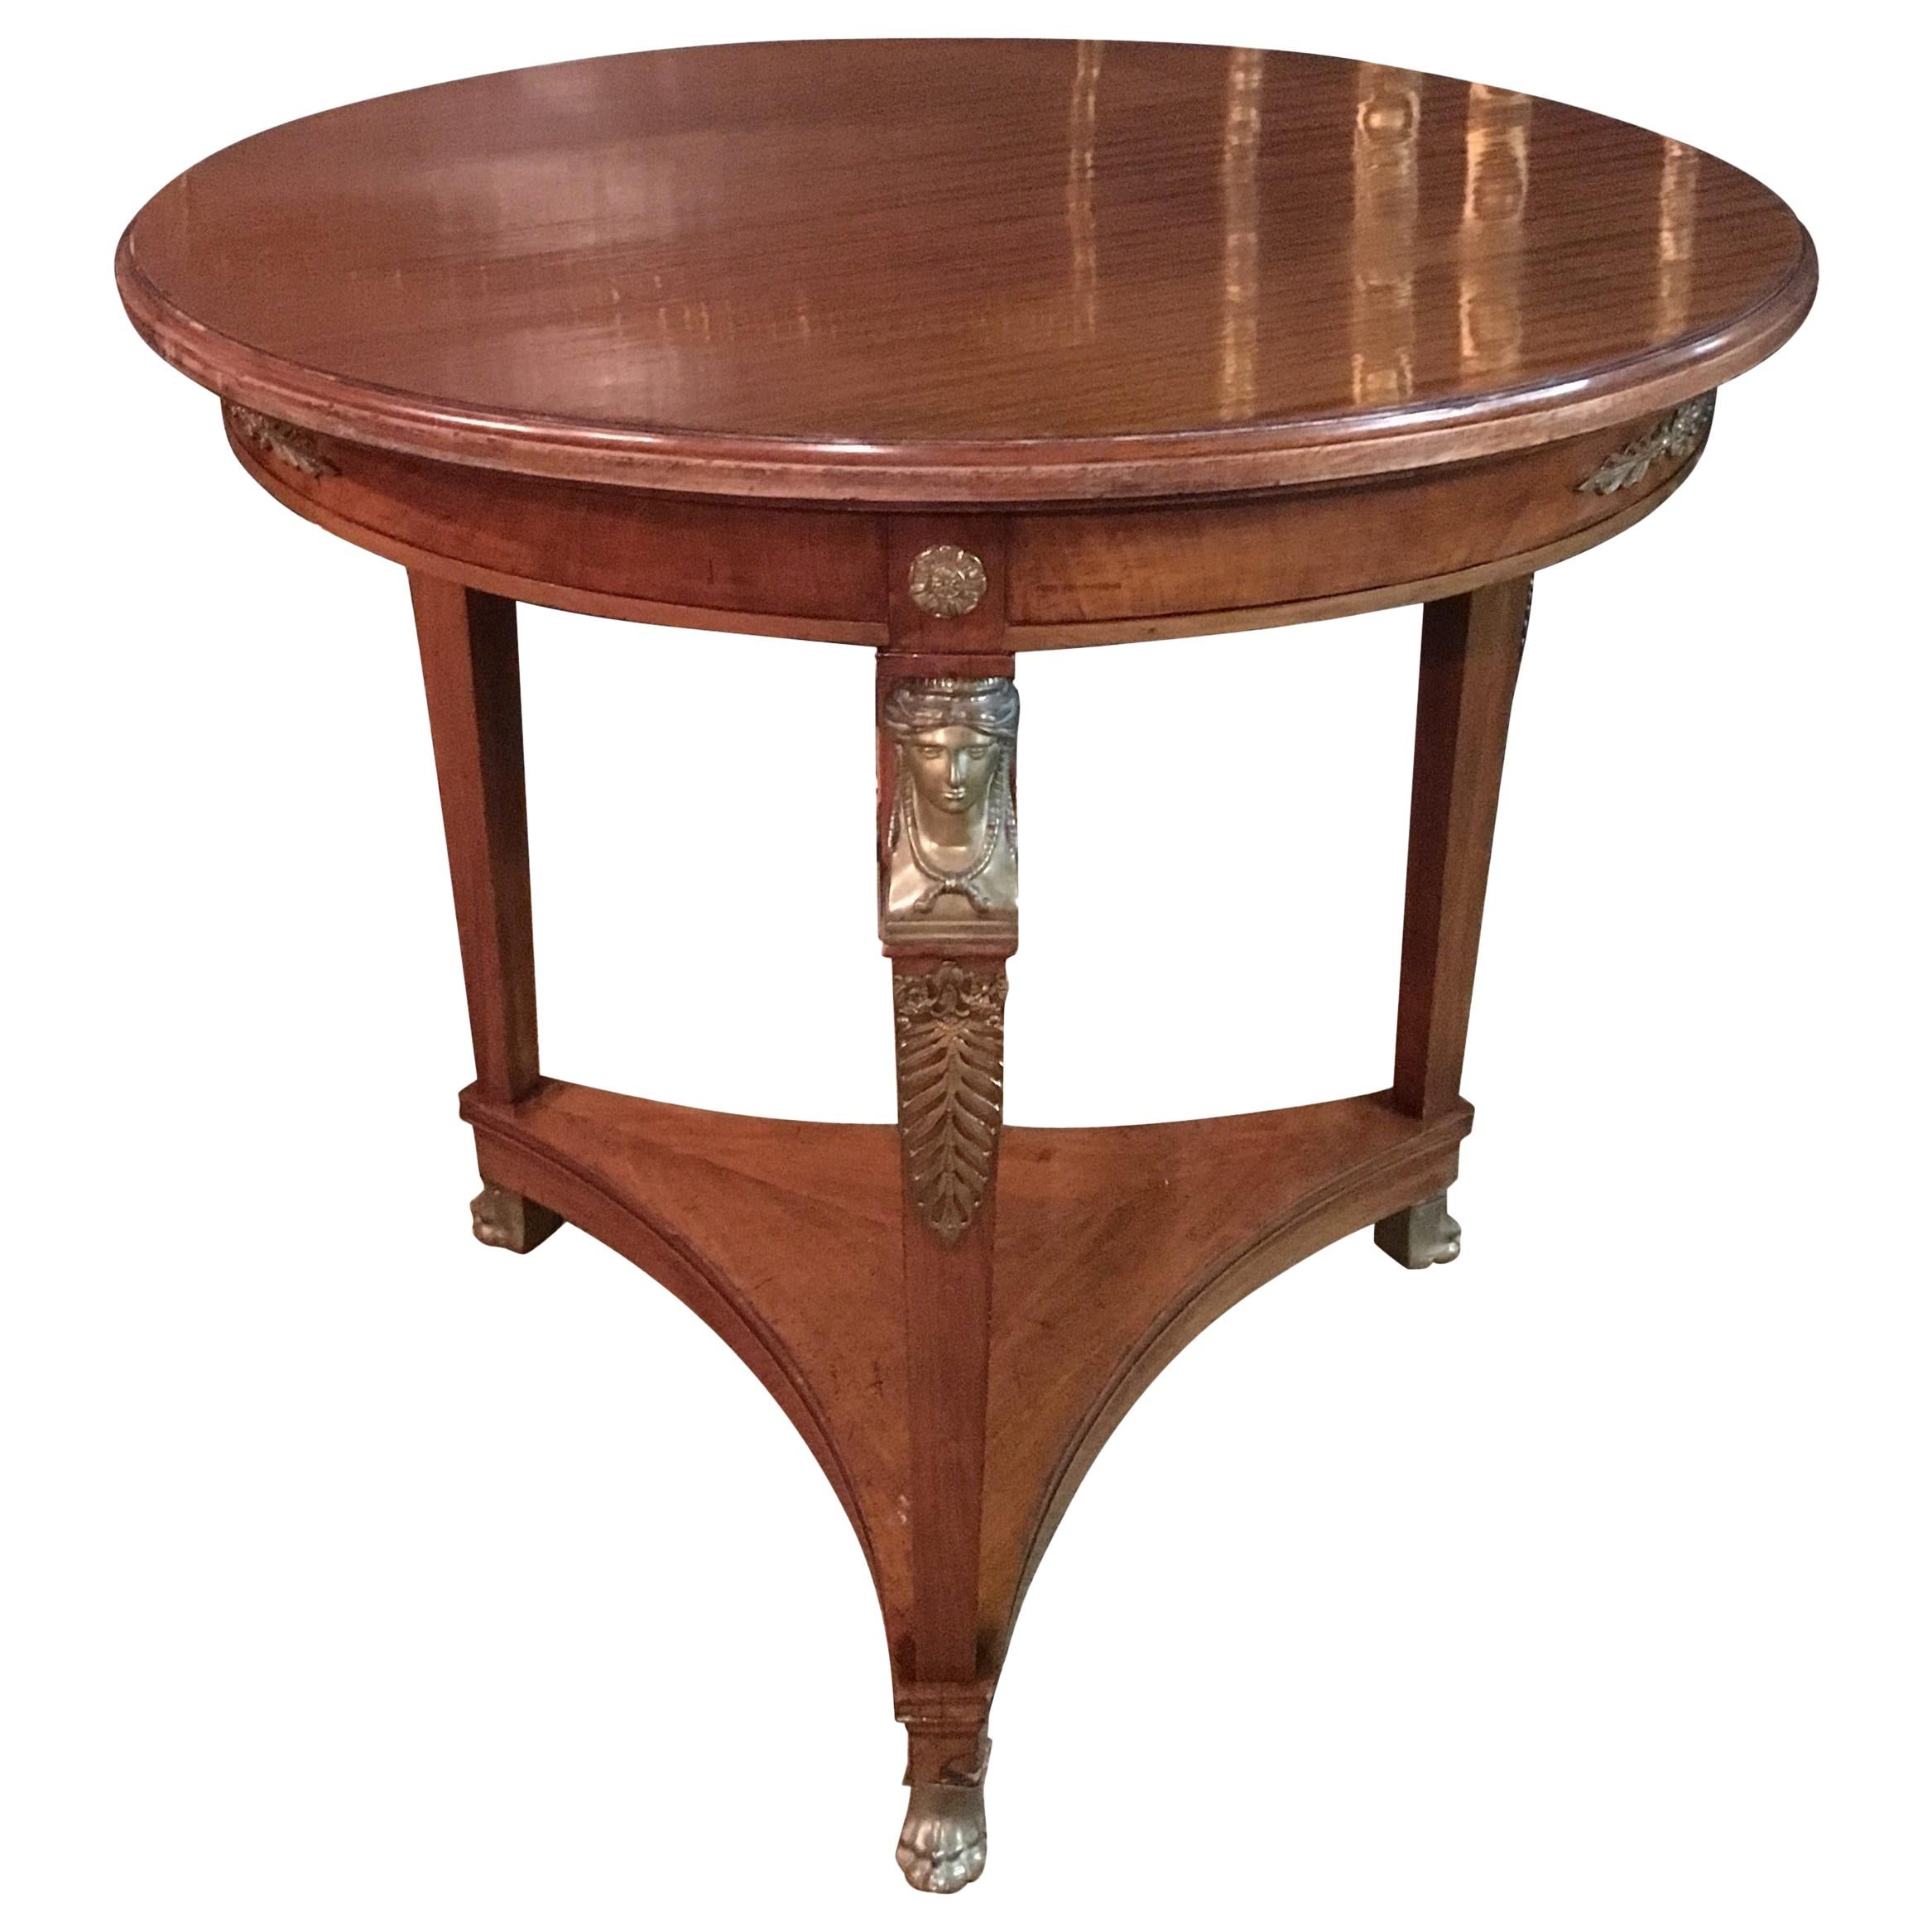 Original antiker Empire Tisch ca. 1860 - 1880 Mahagoni Furnier bronziert 